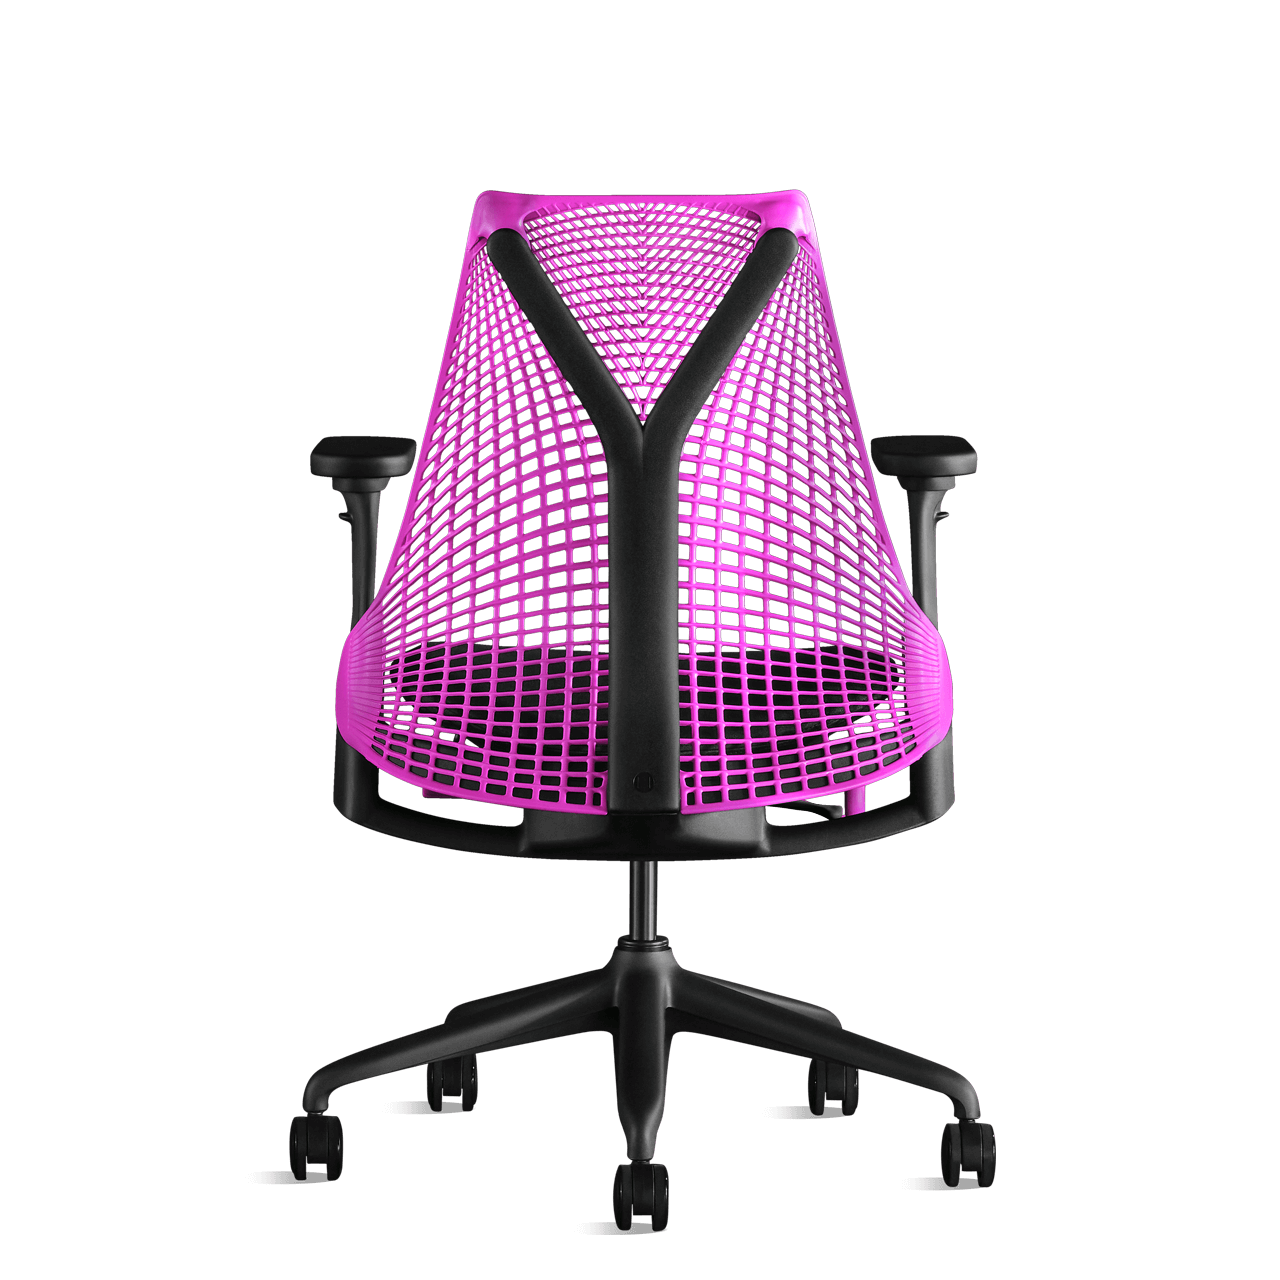 Sayl座椅 - 繁星紫